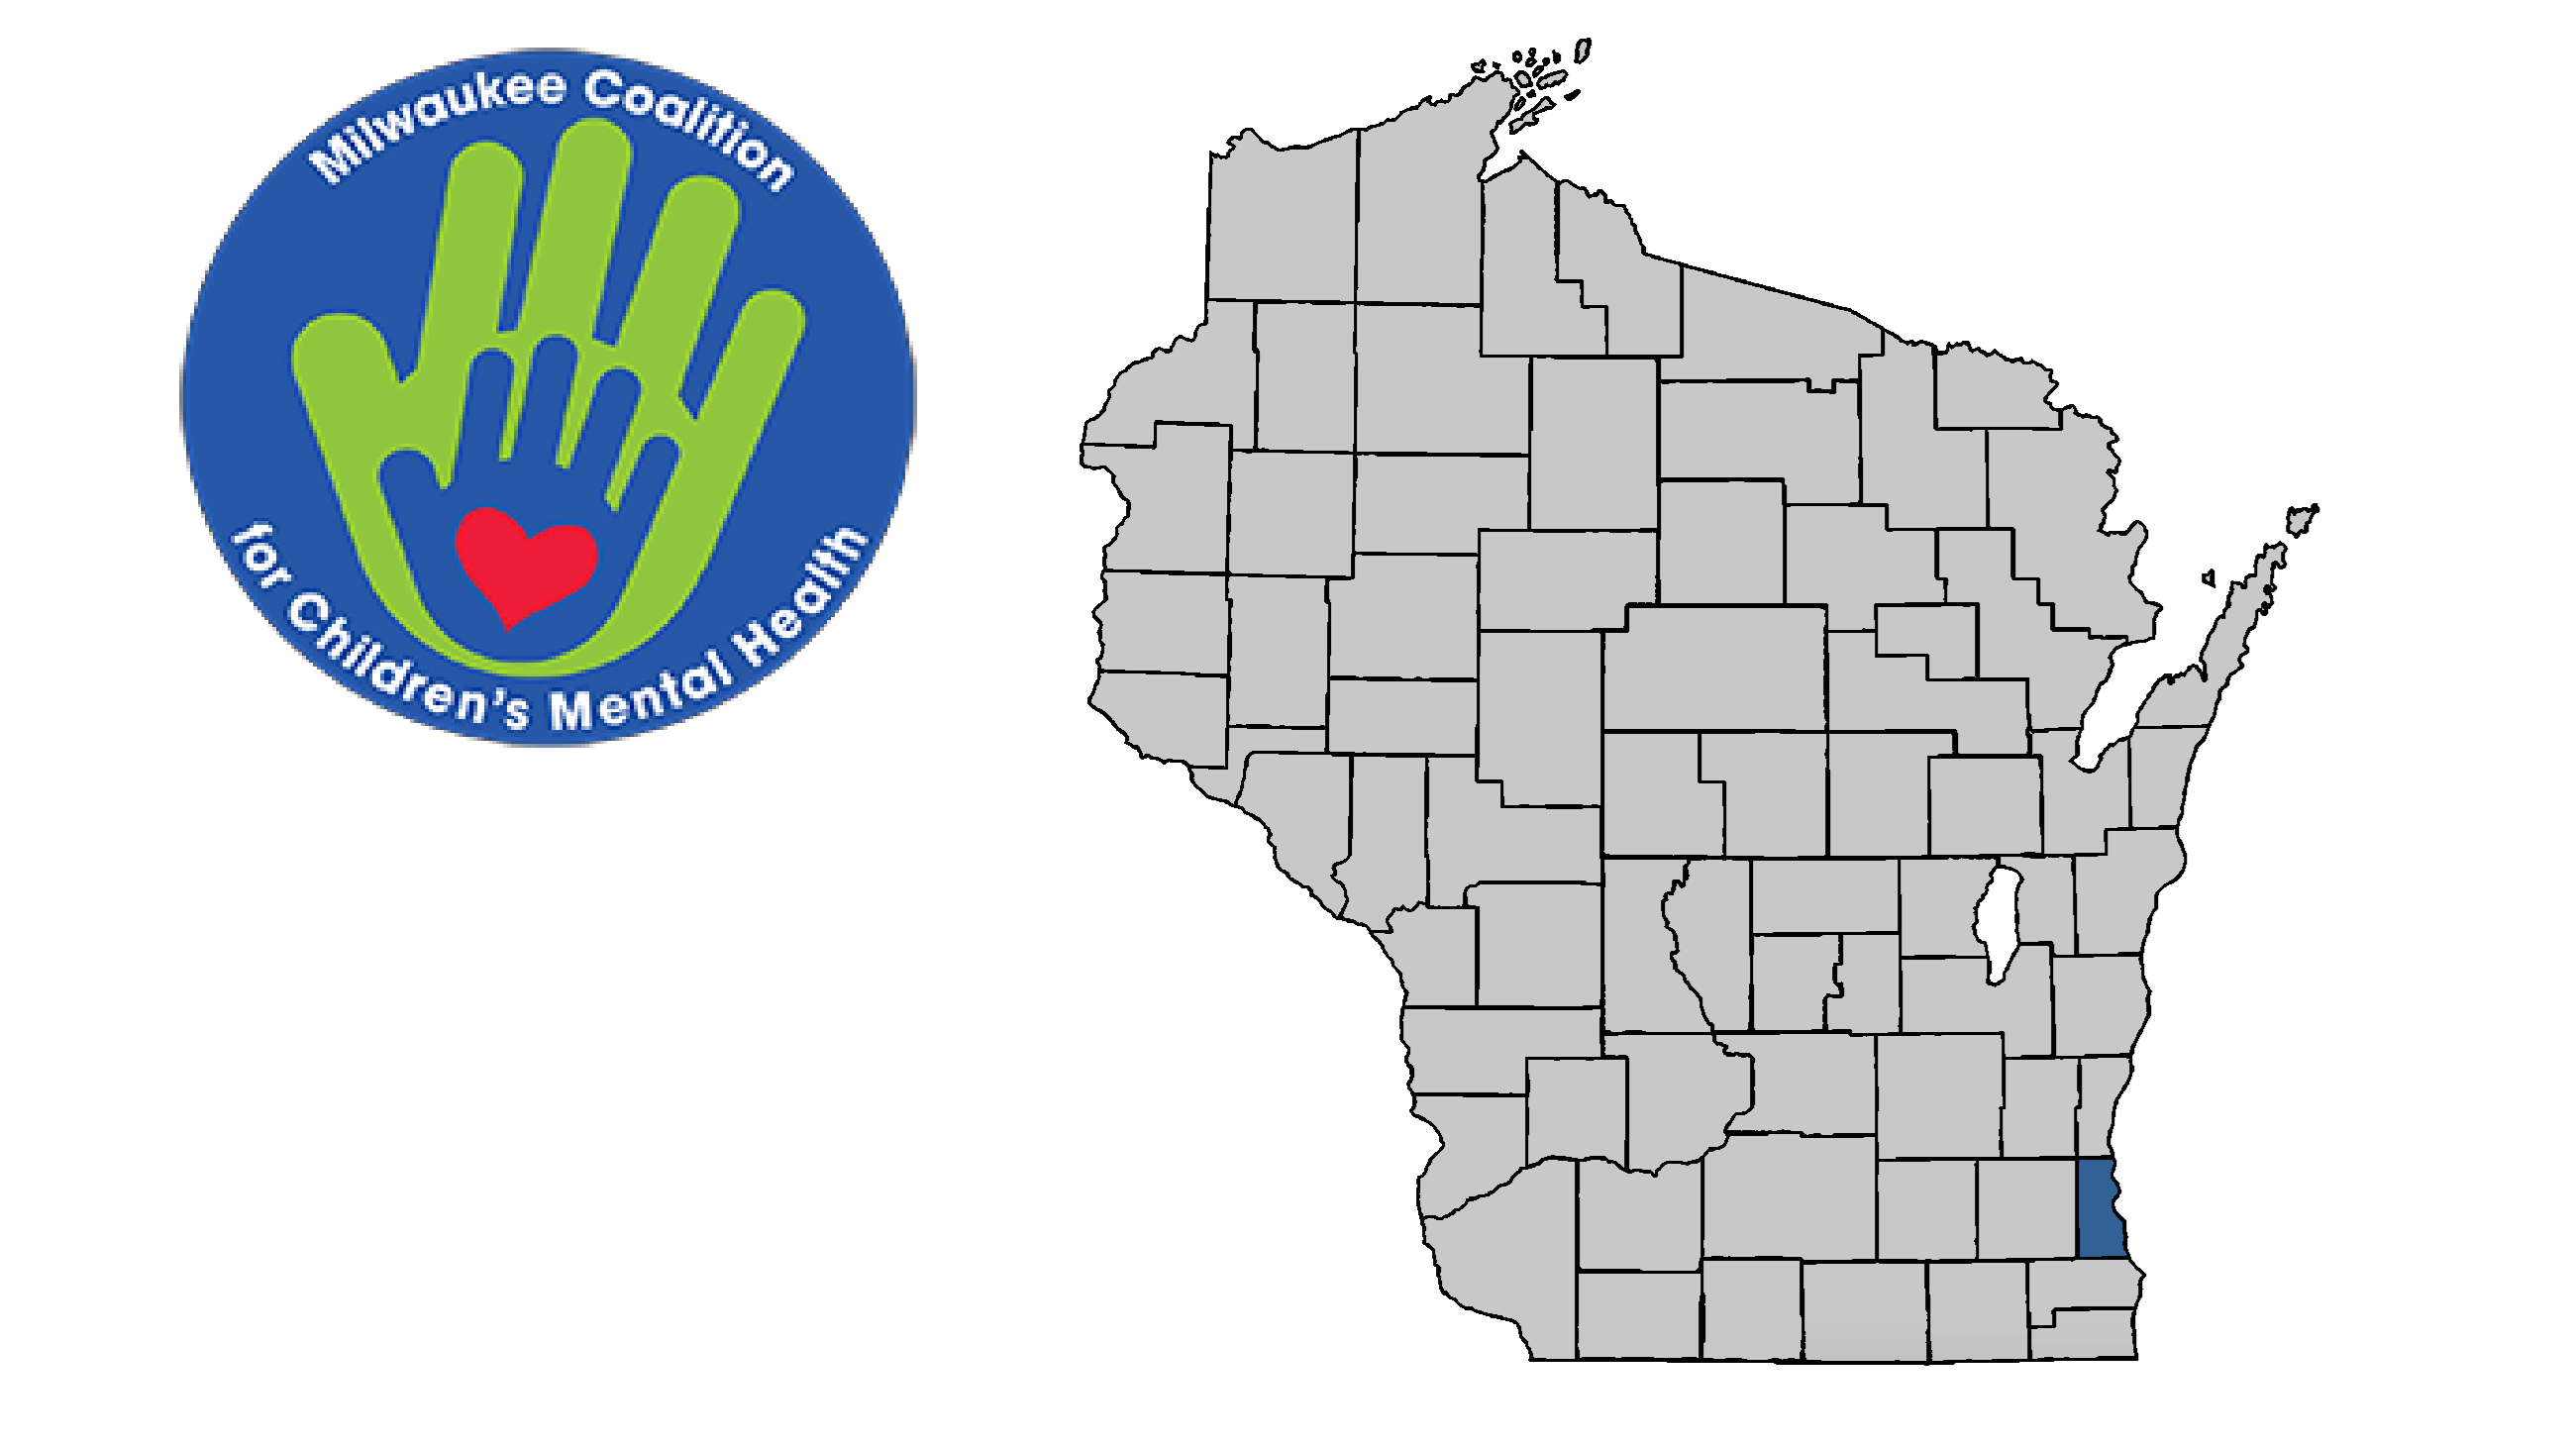 Milwaukee Coalition for Children's Mental Health Map